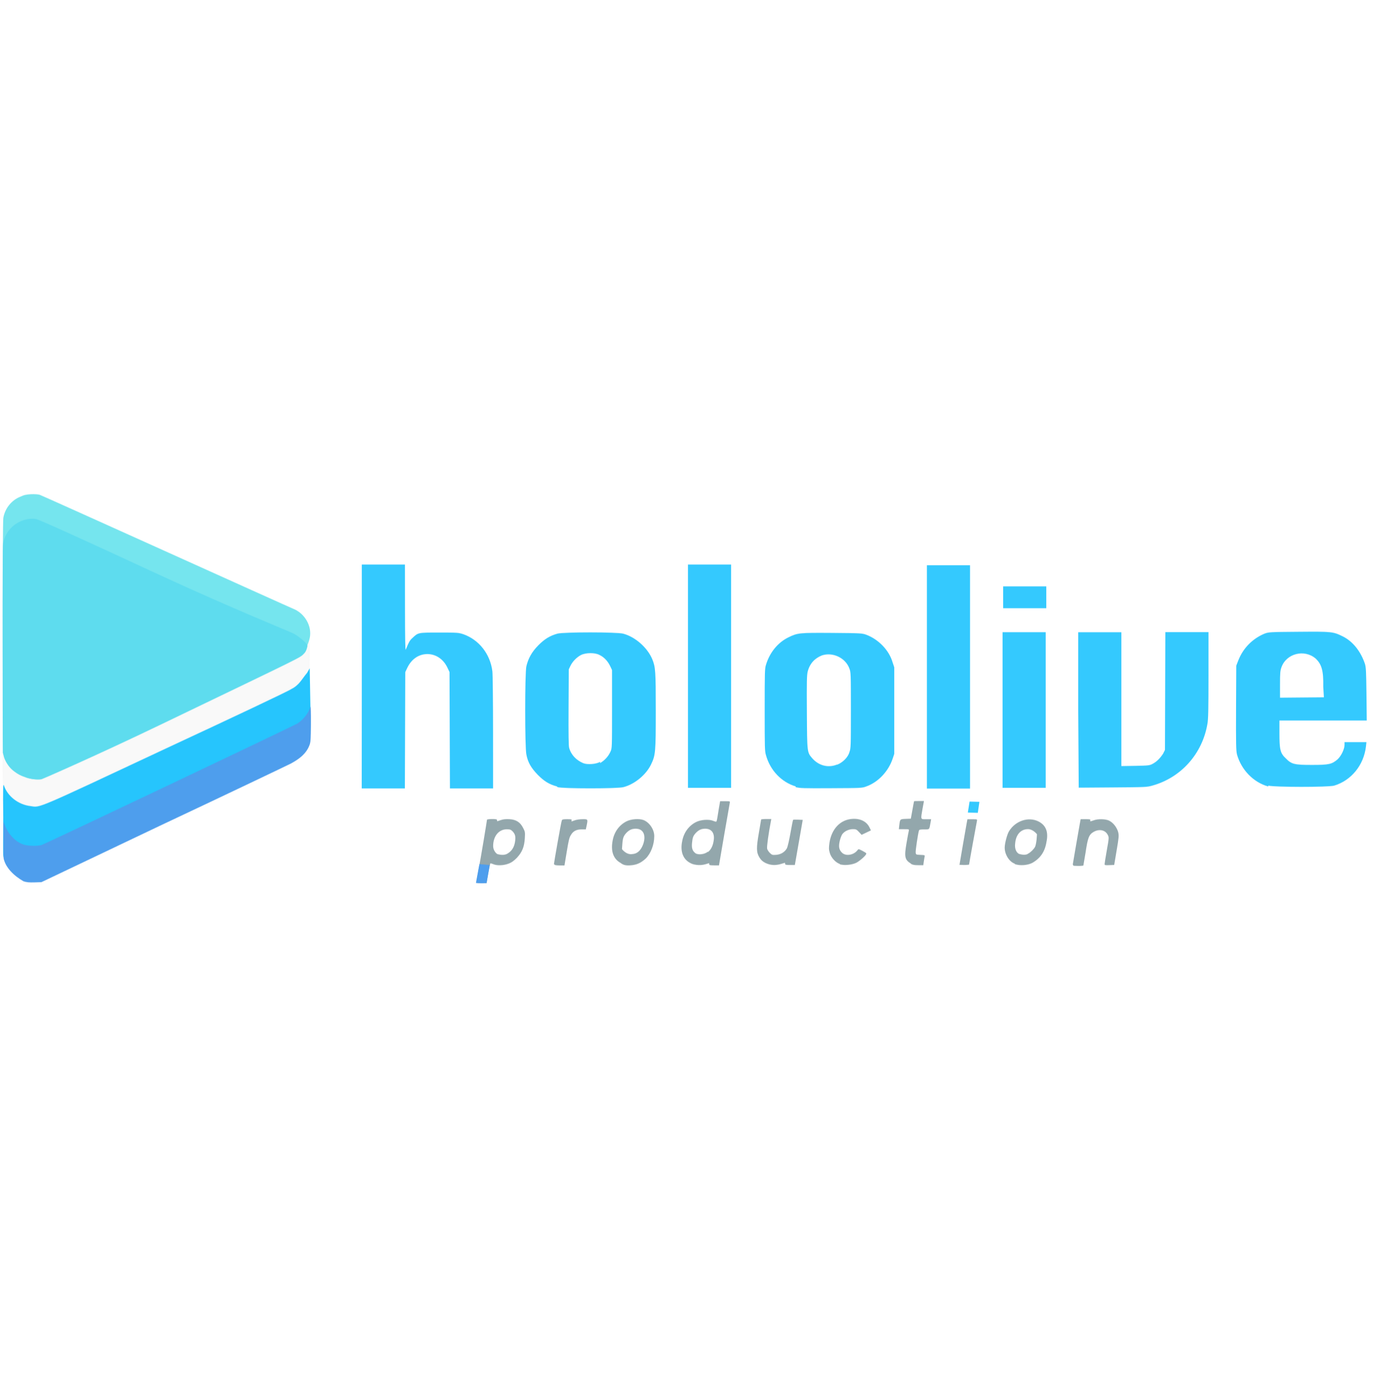 Hololive Production